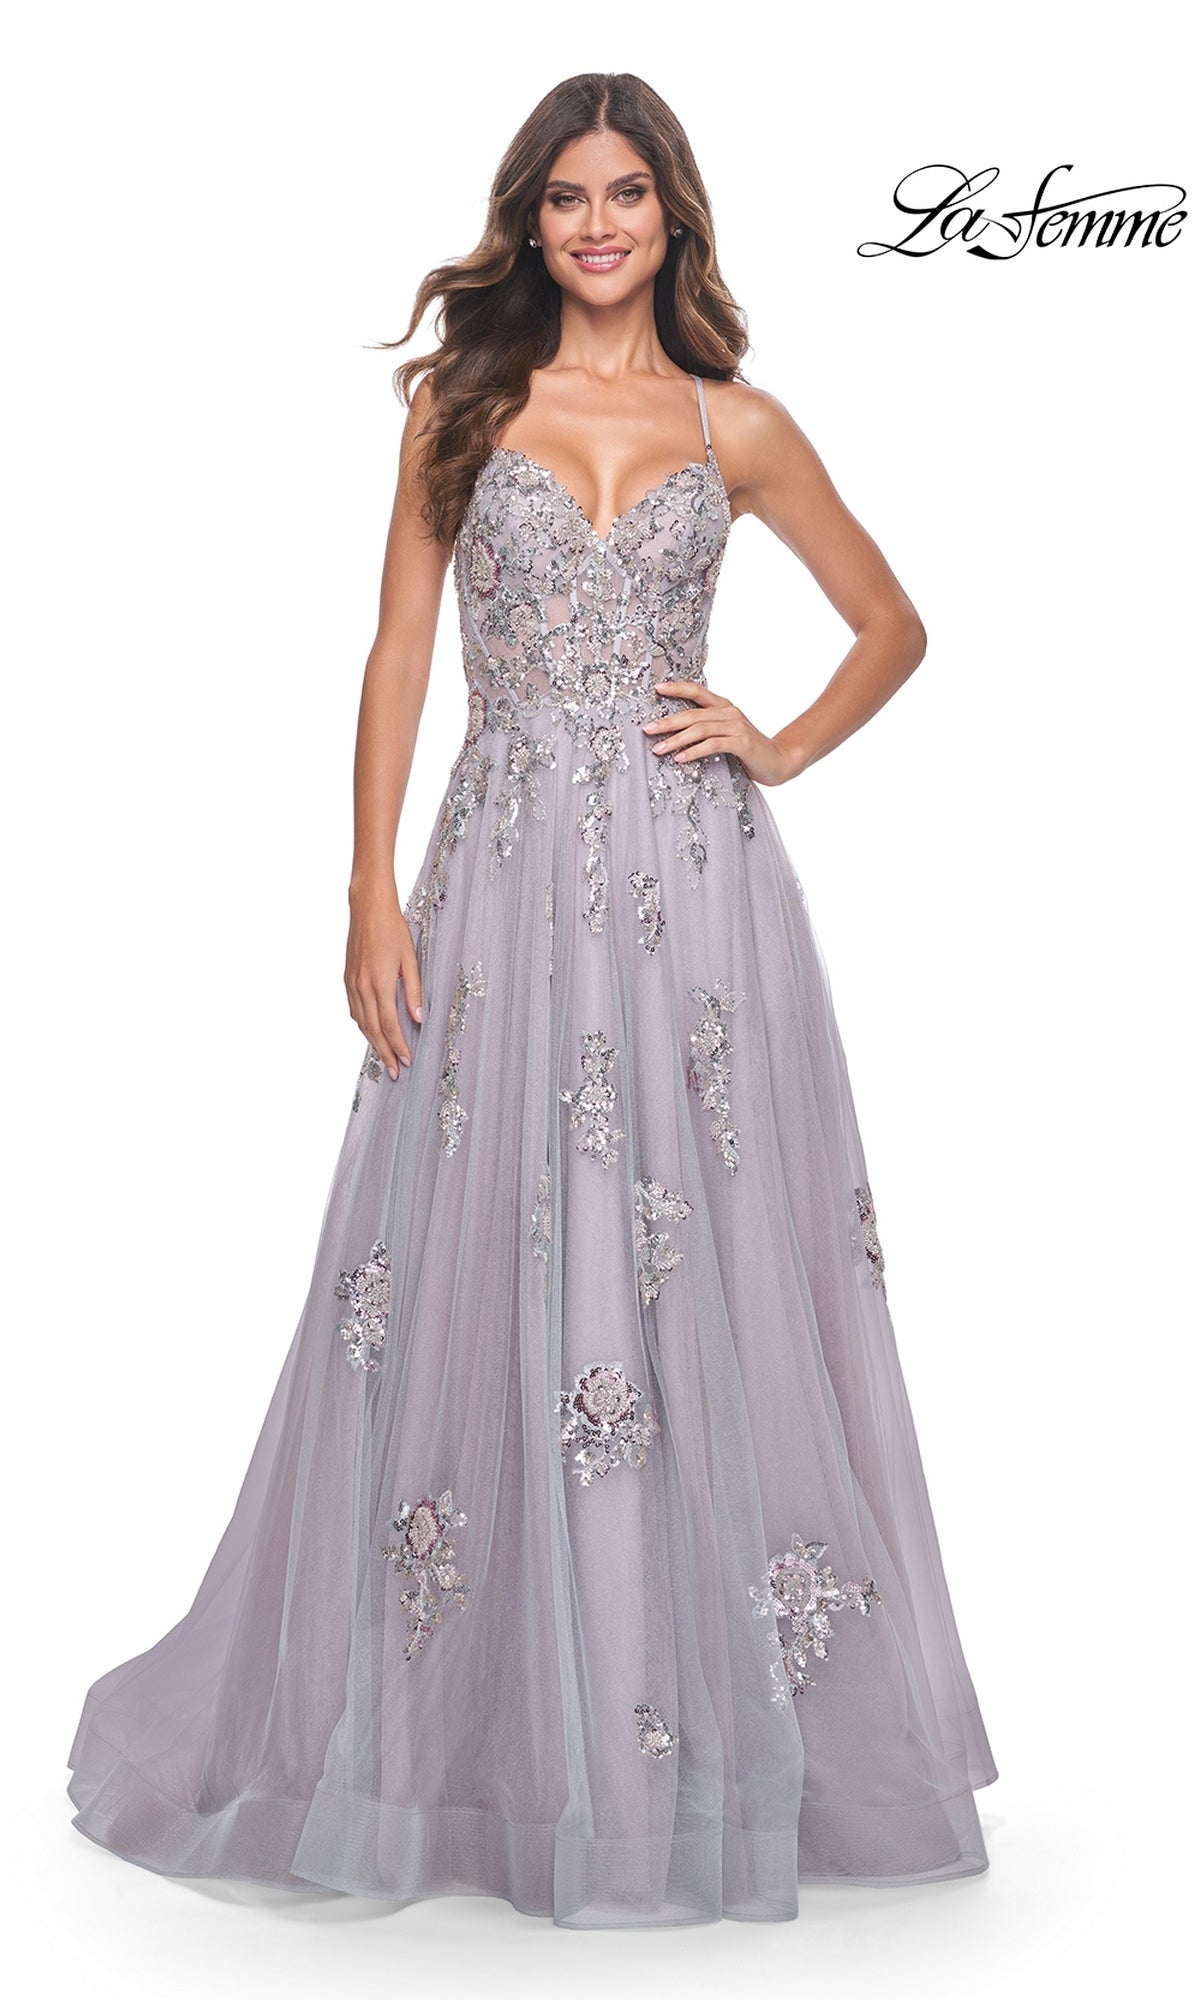  La Femme 32200 Formal Prom Dress